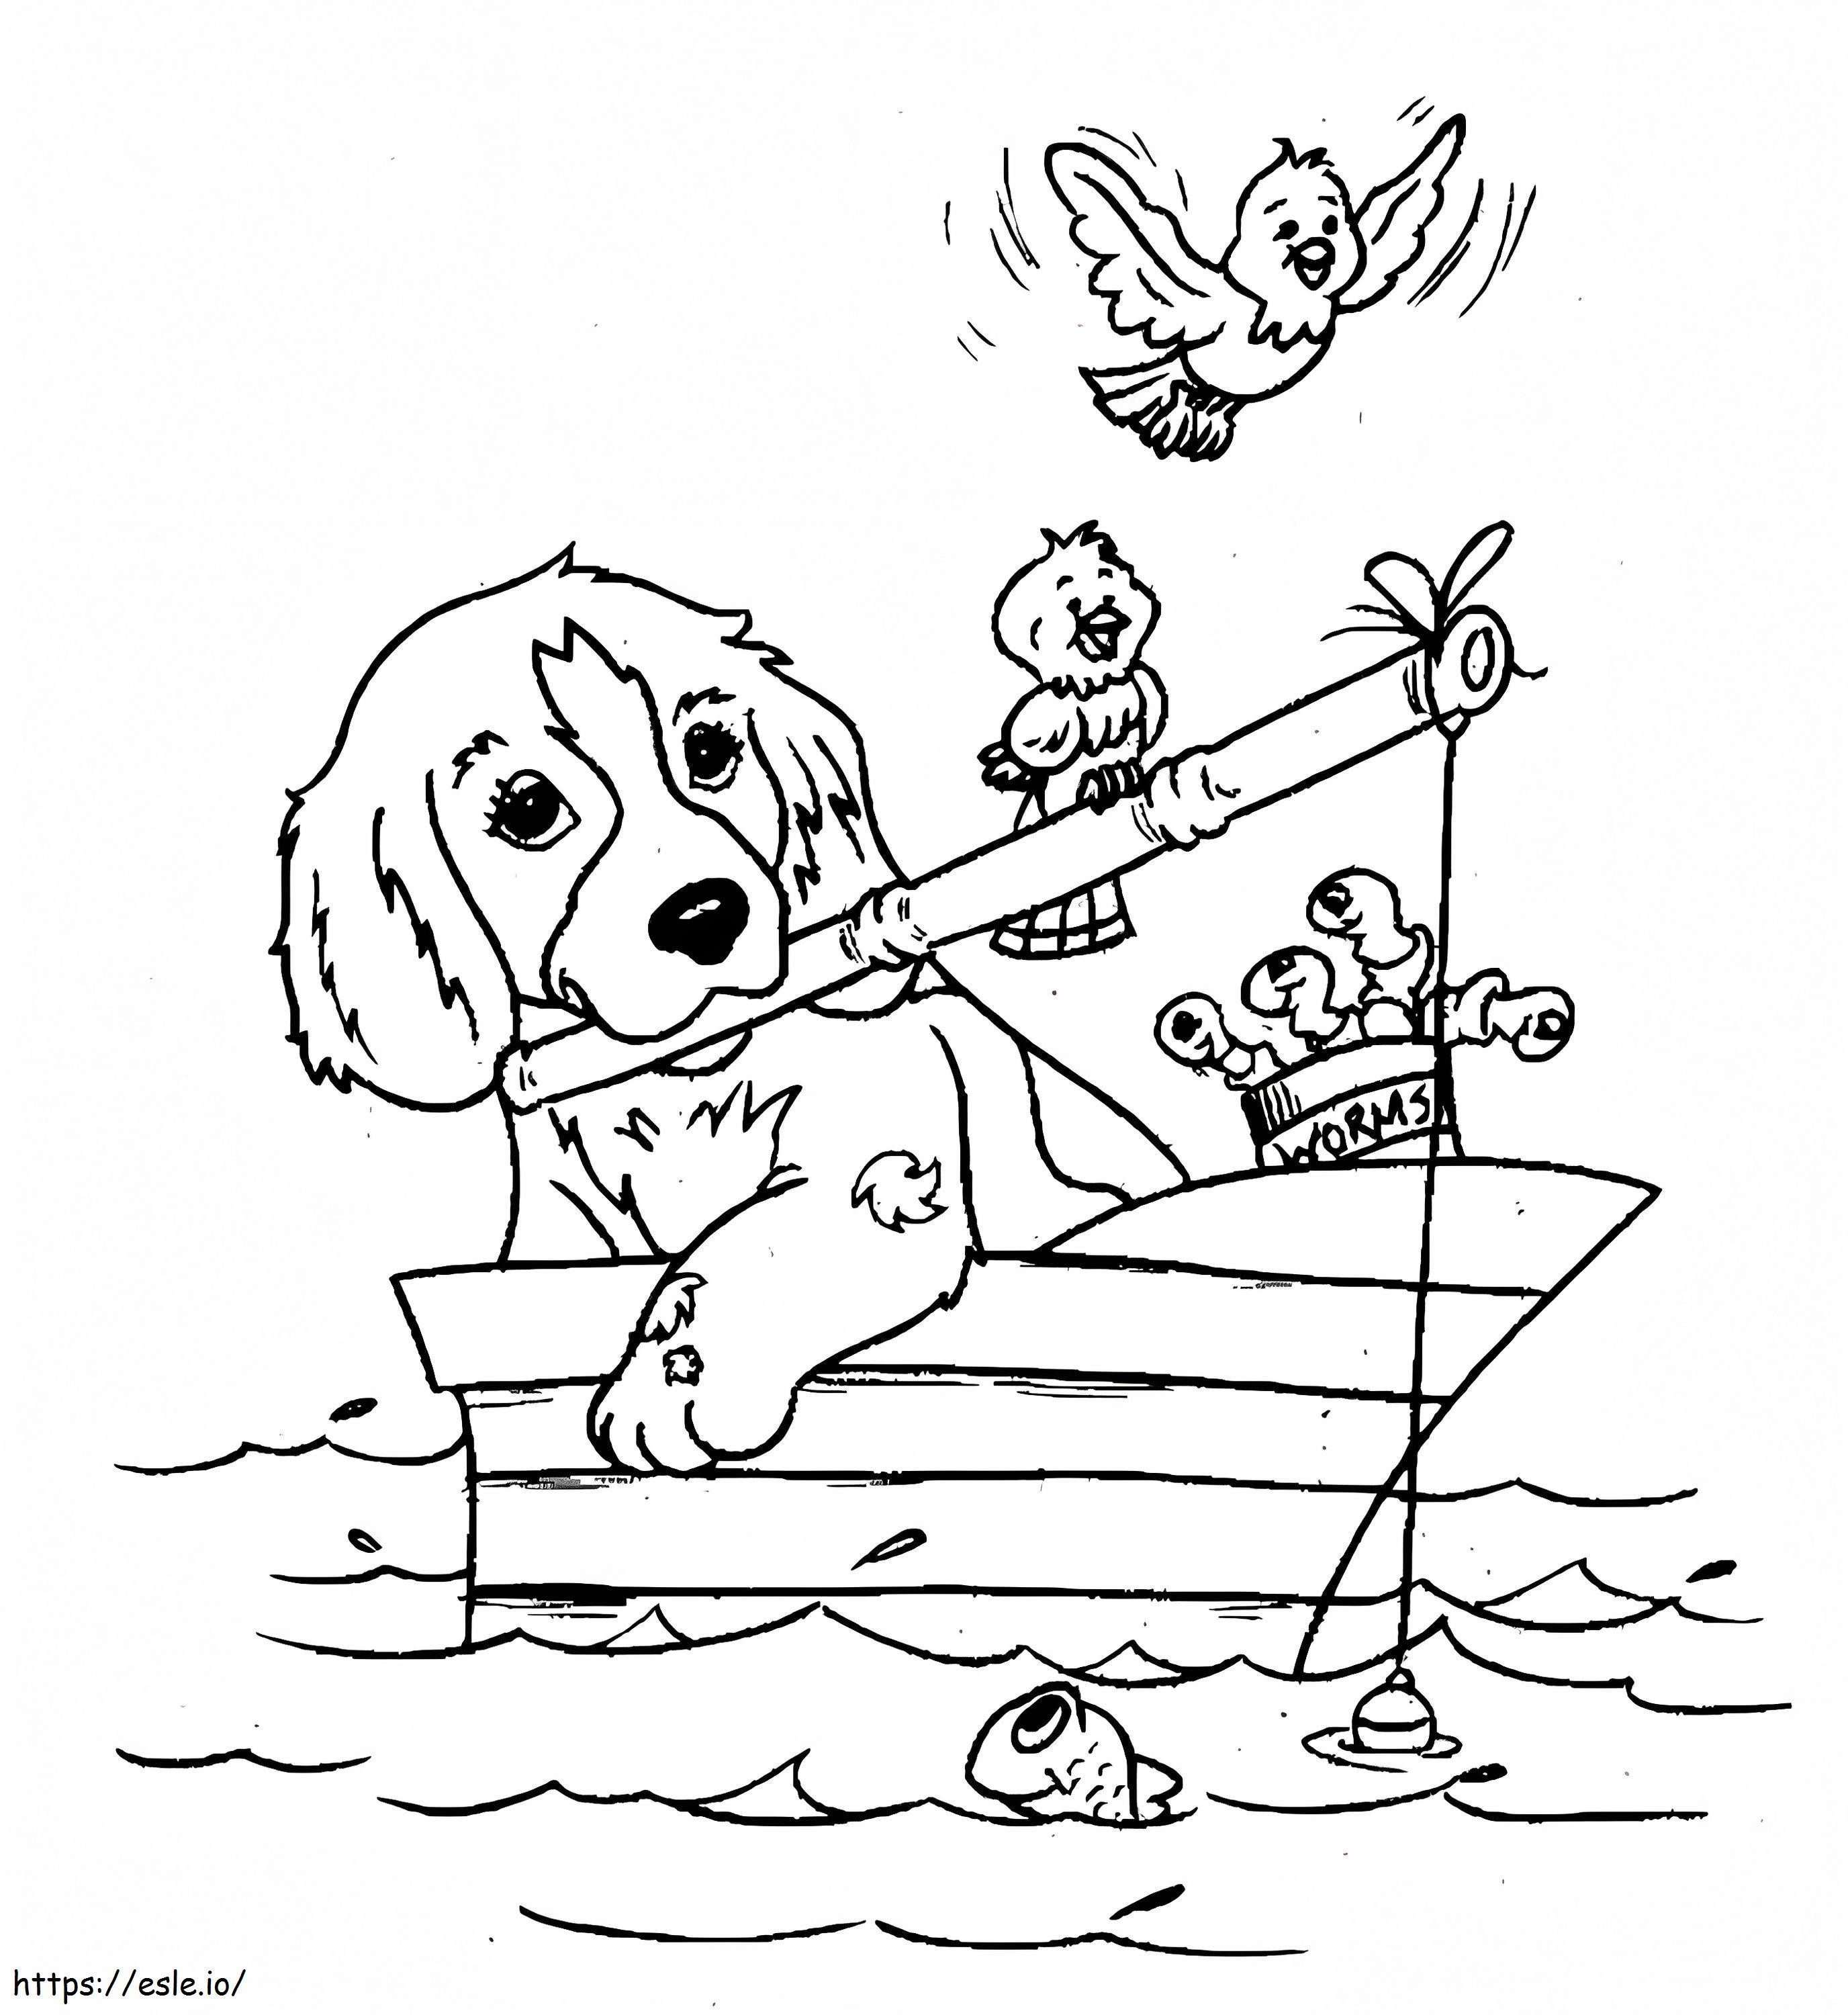 Dog Fishing coloring page